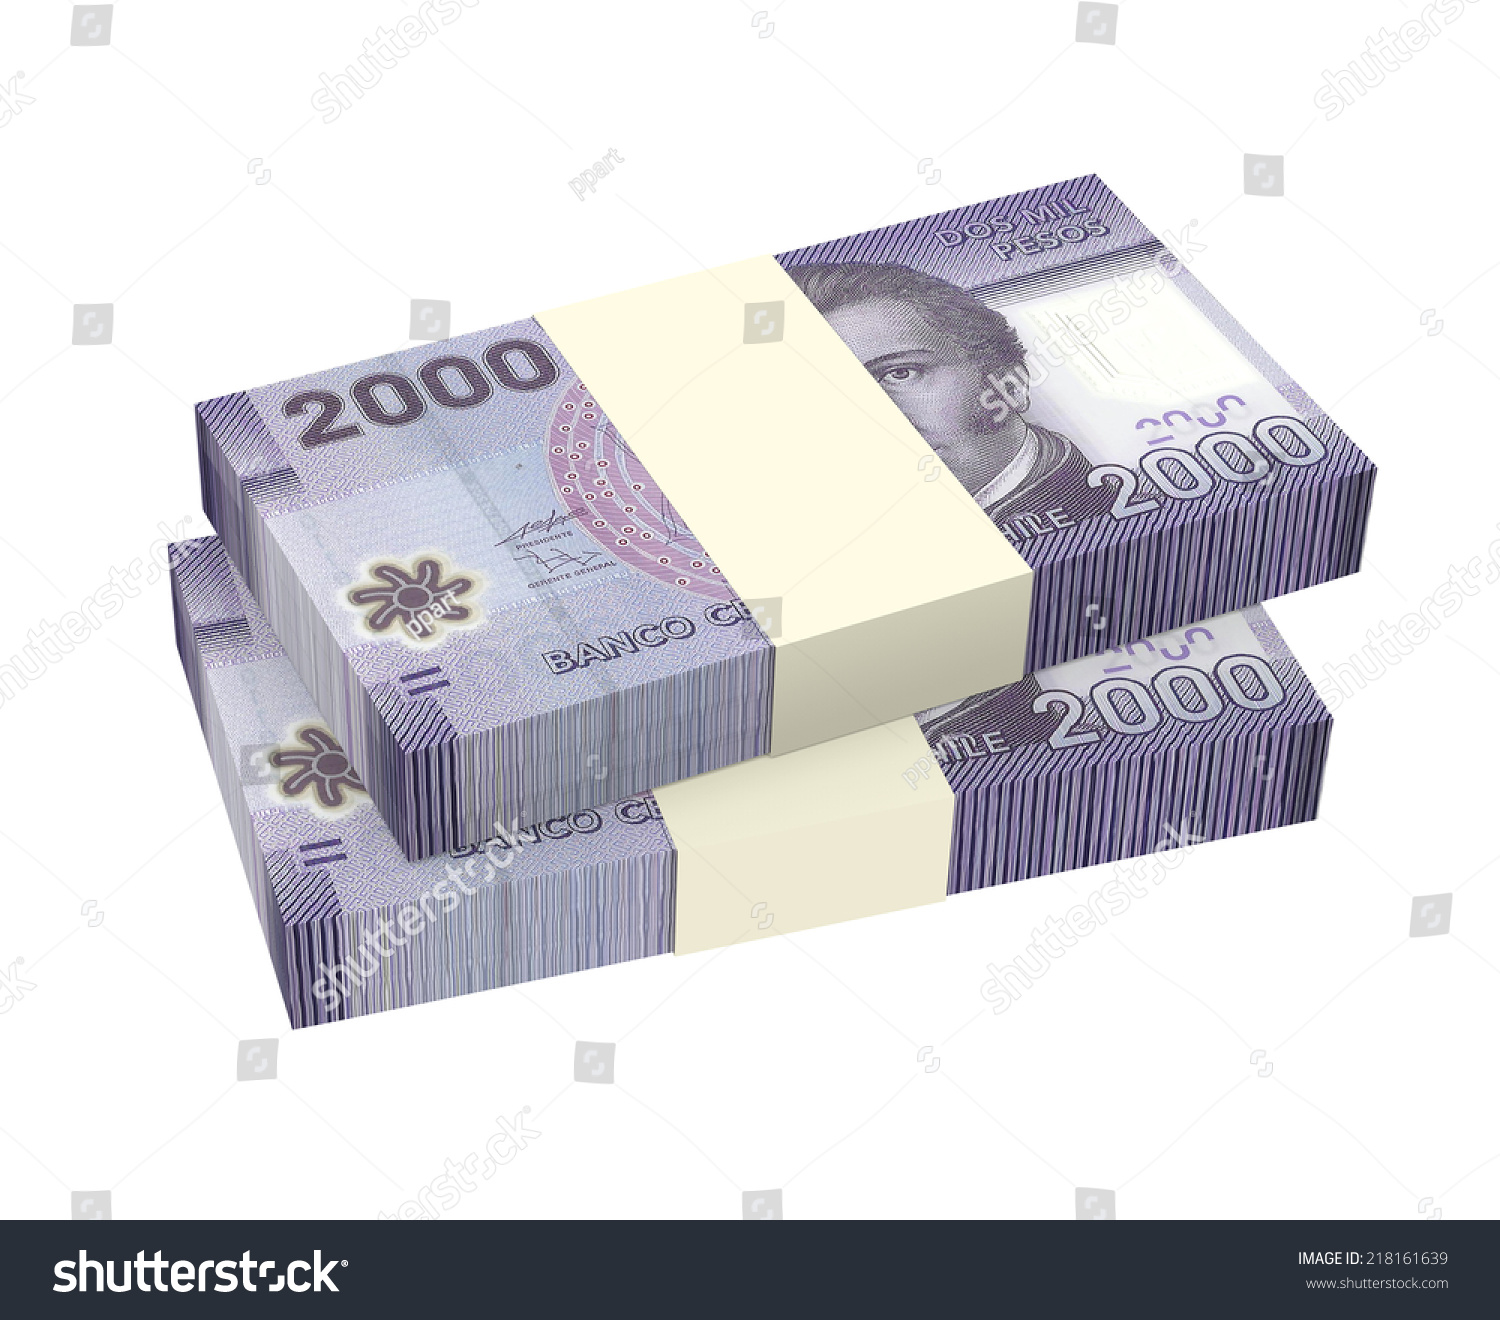 Pounds to myr 2000 British Pound